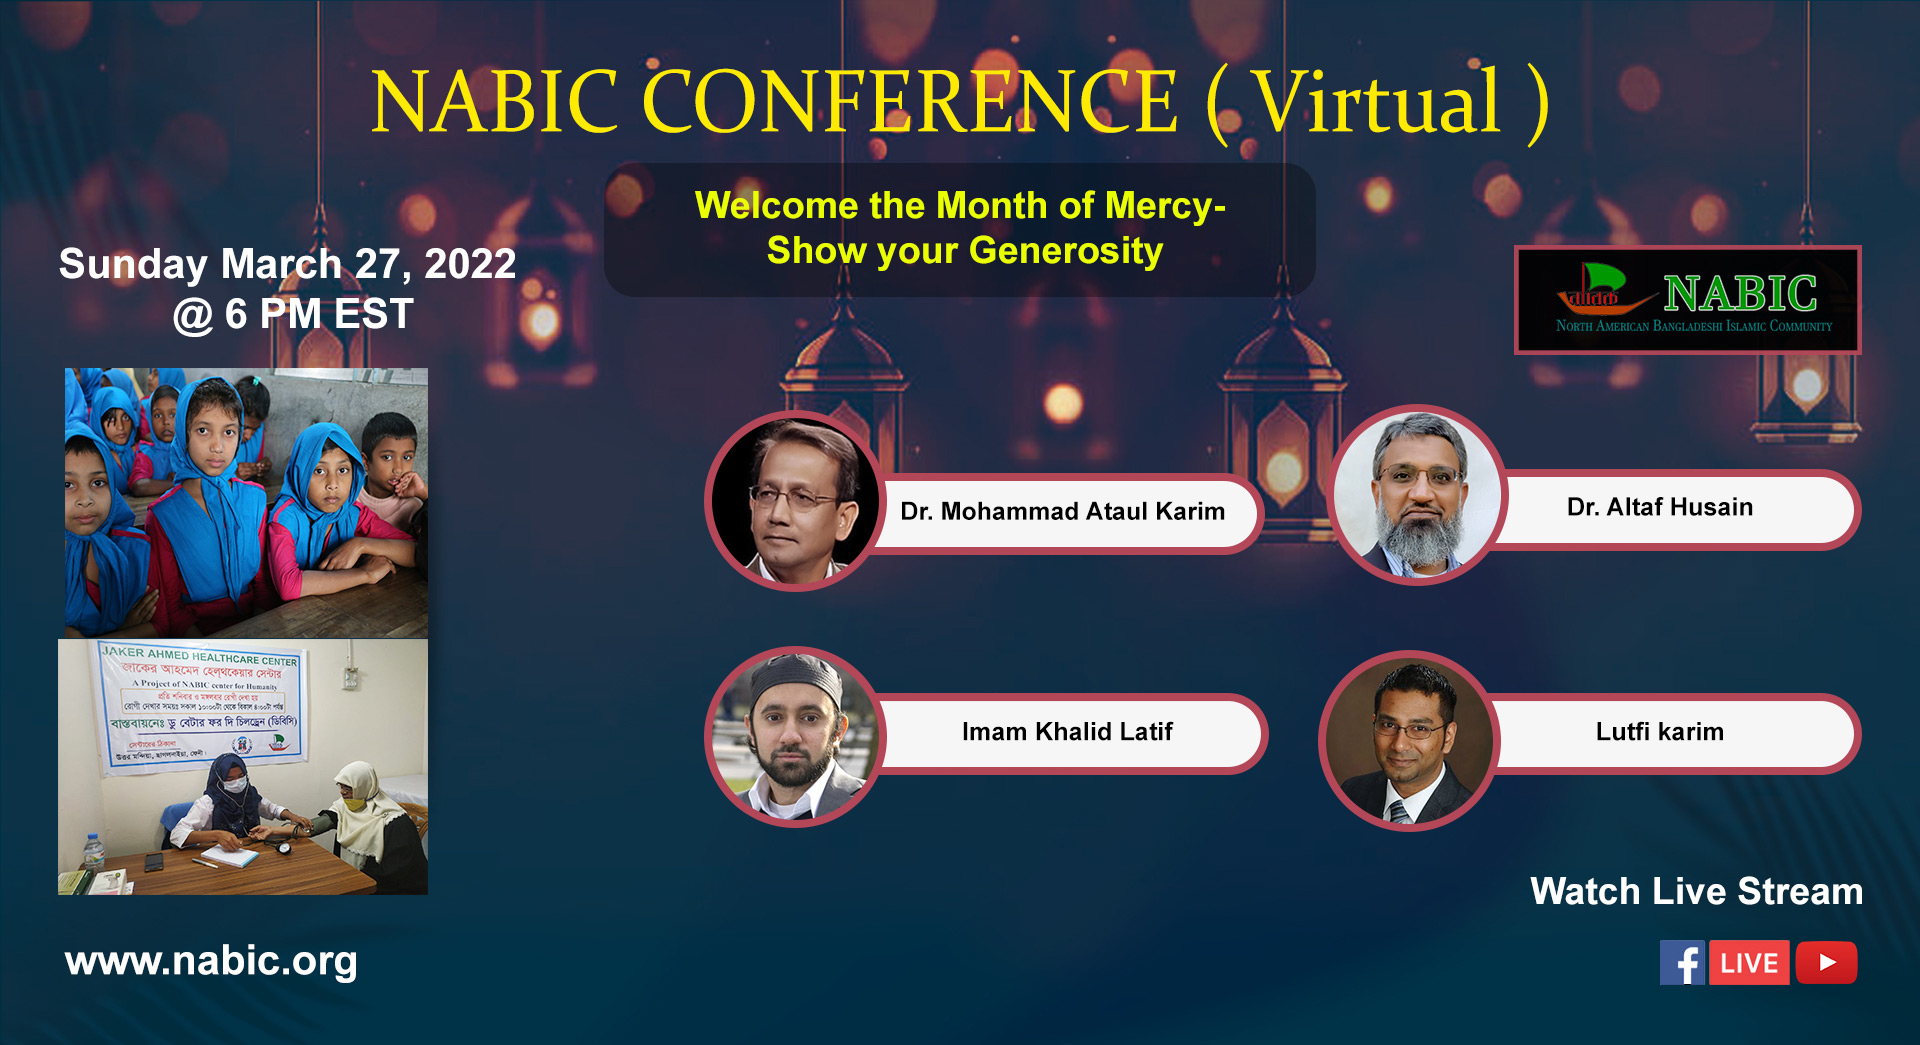 Nabic Conference (Virtual)